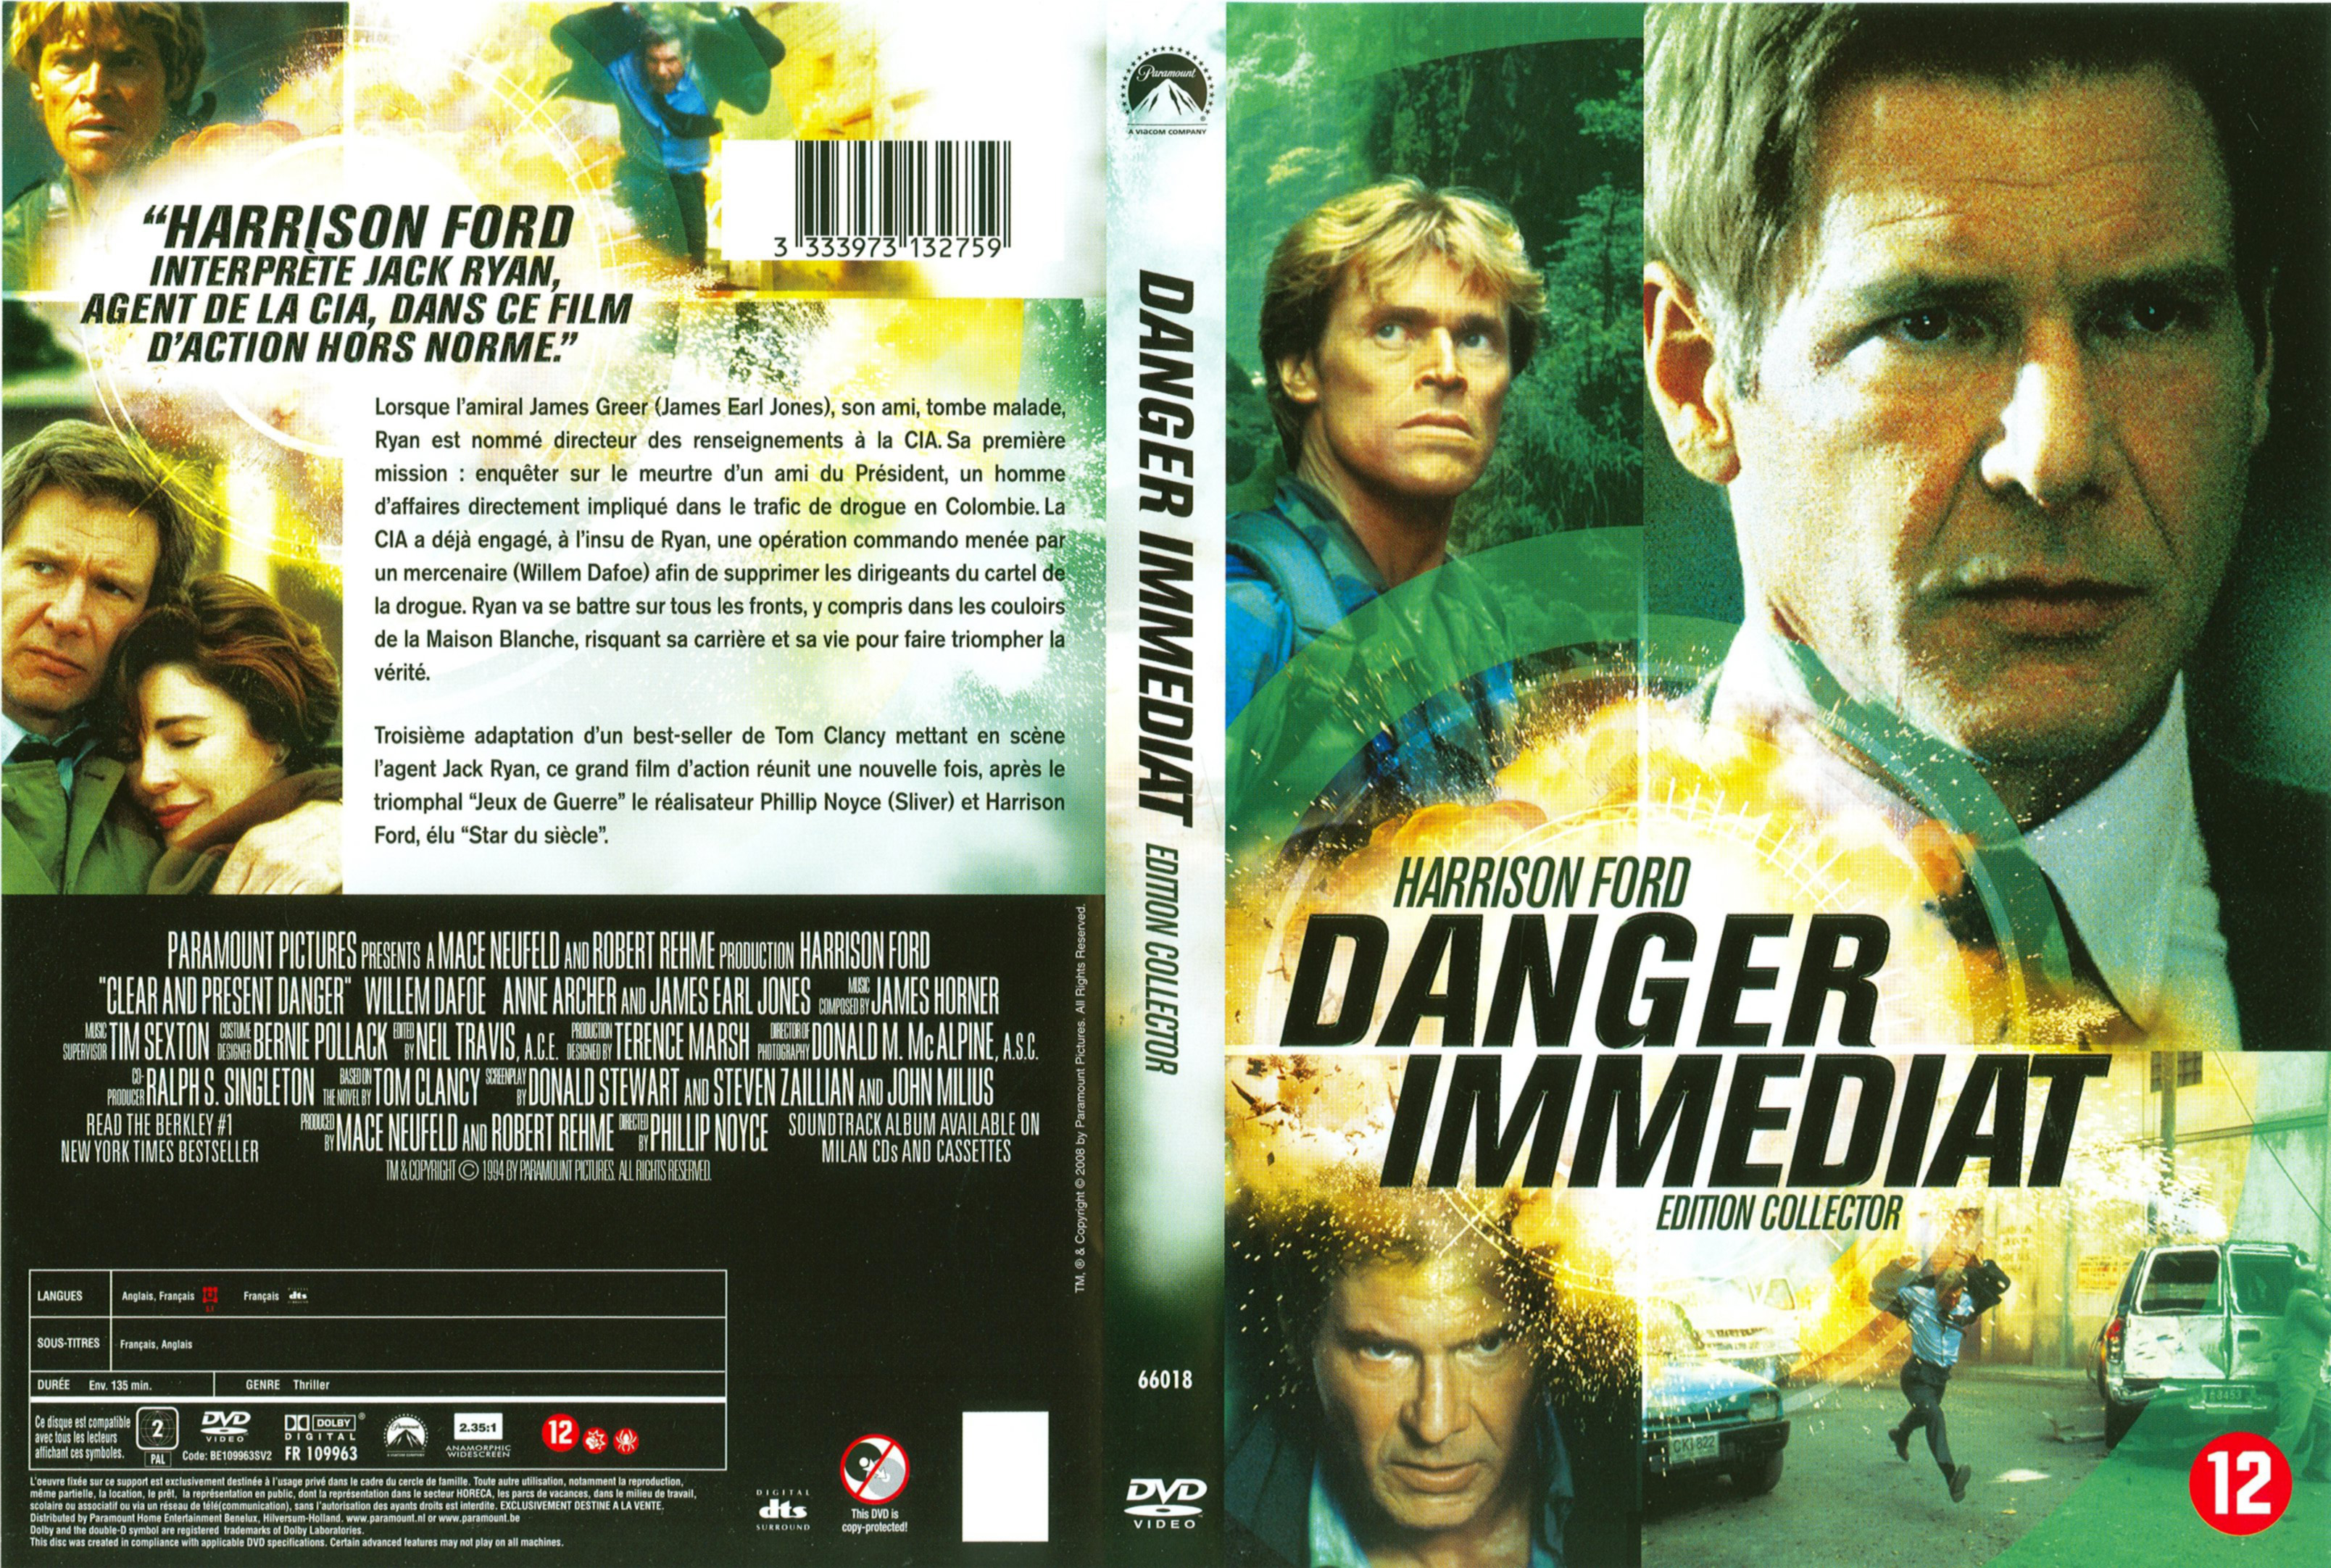 Jaquette DVD Danger immediat v3